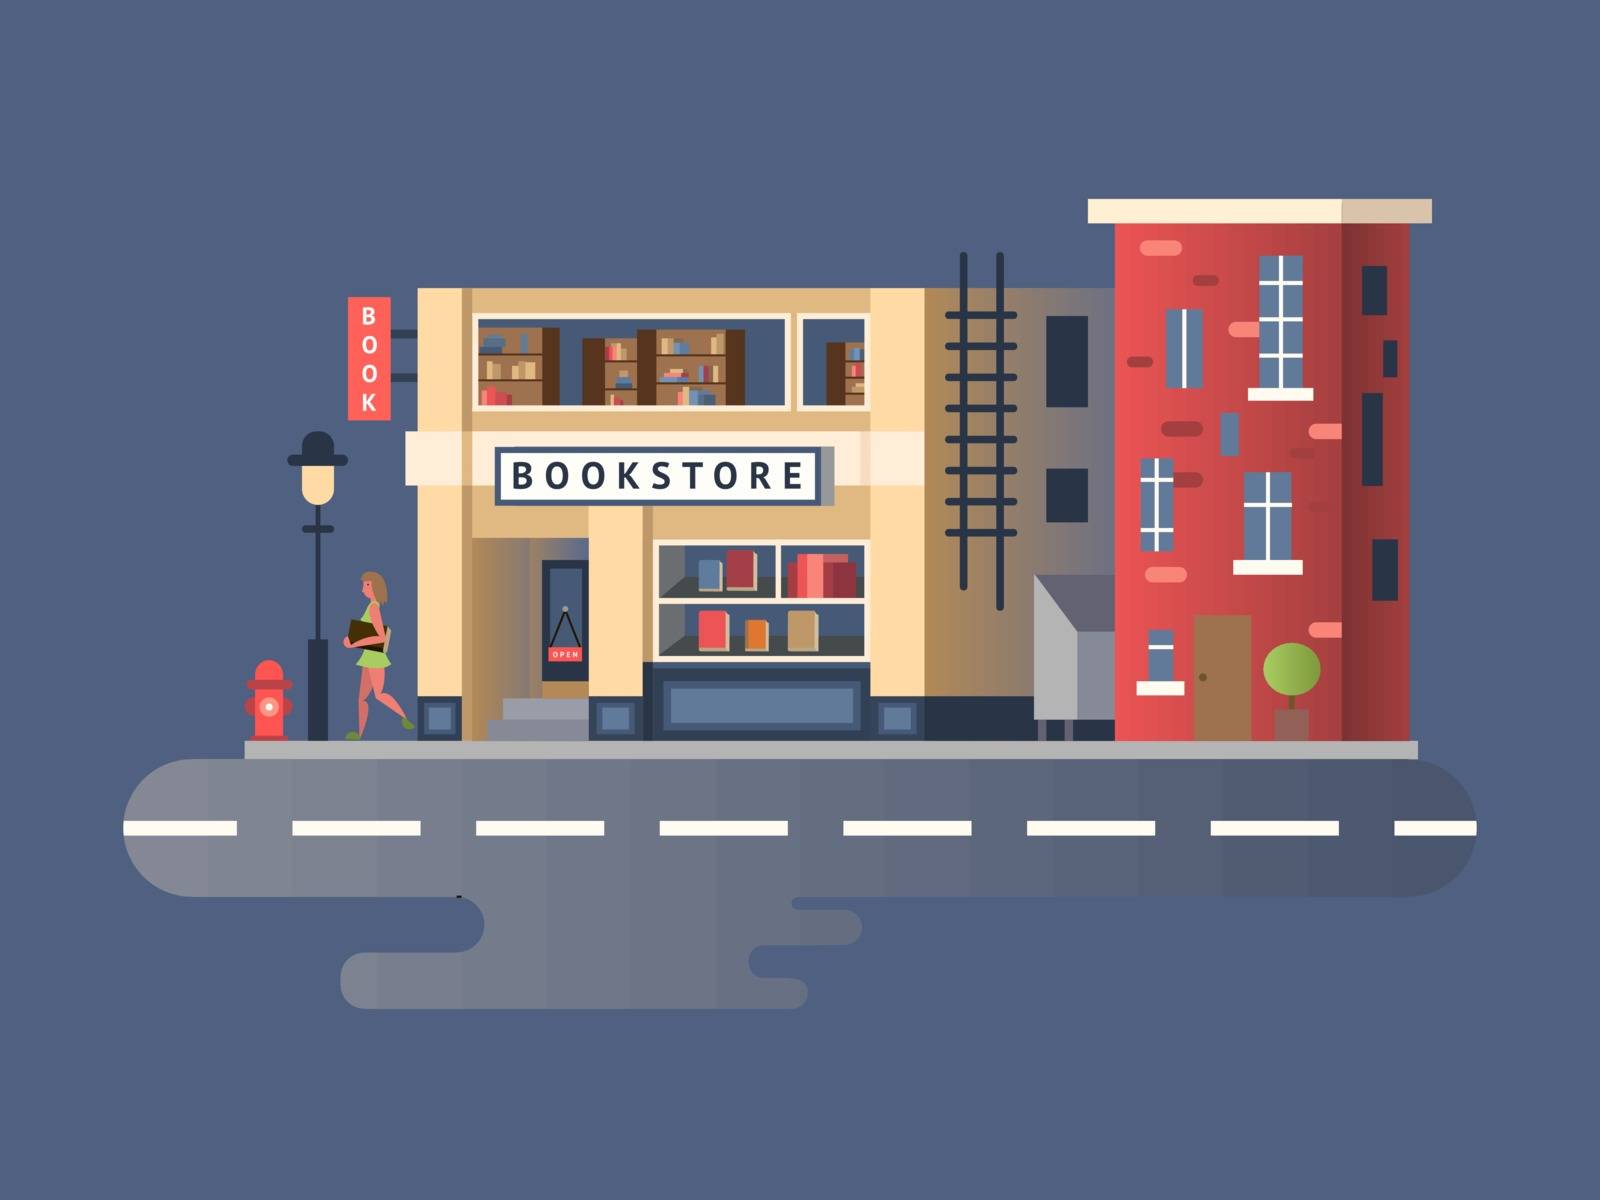 Book shop building. Store building, shop market front, street facade, vector illustration